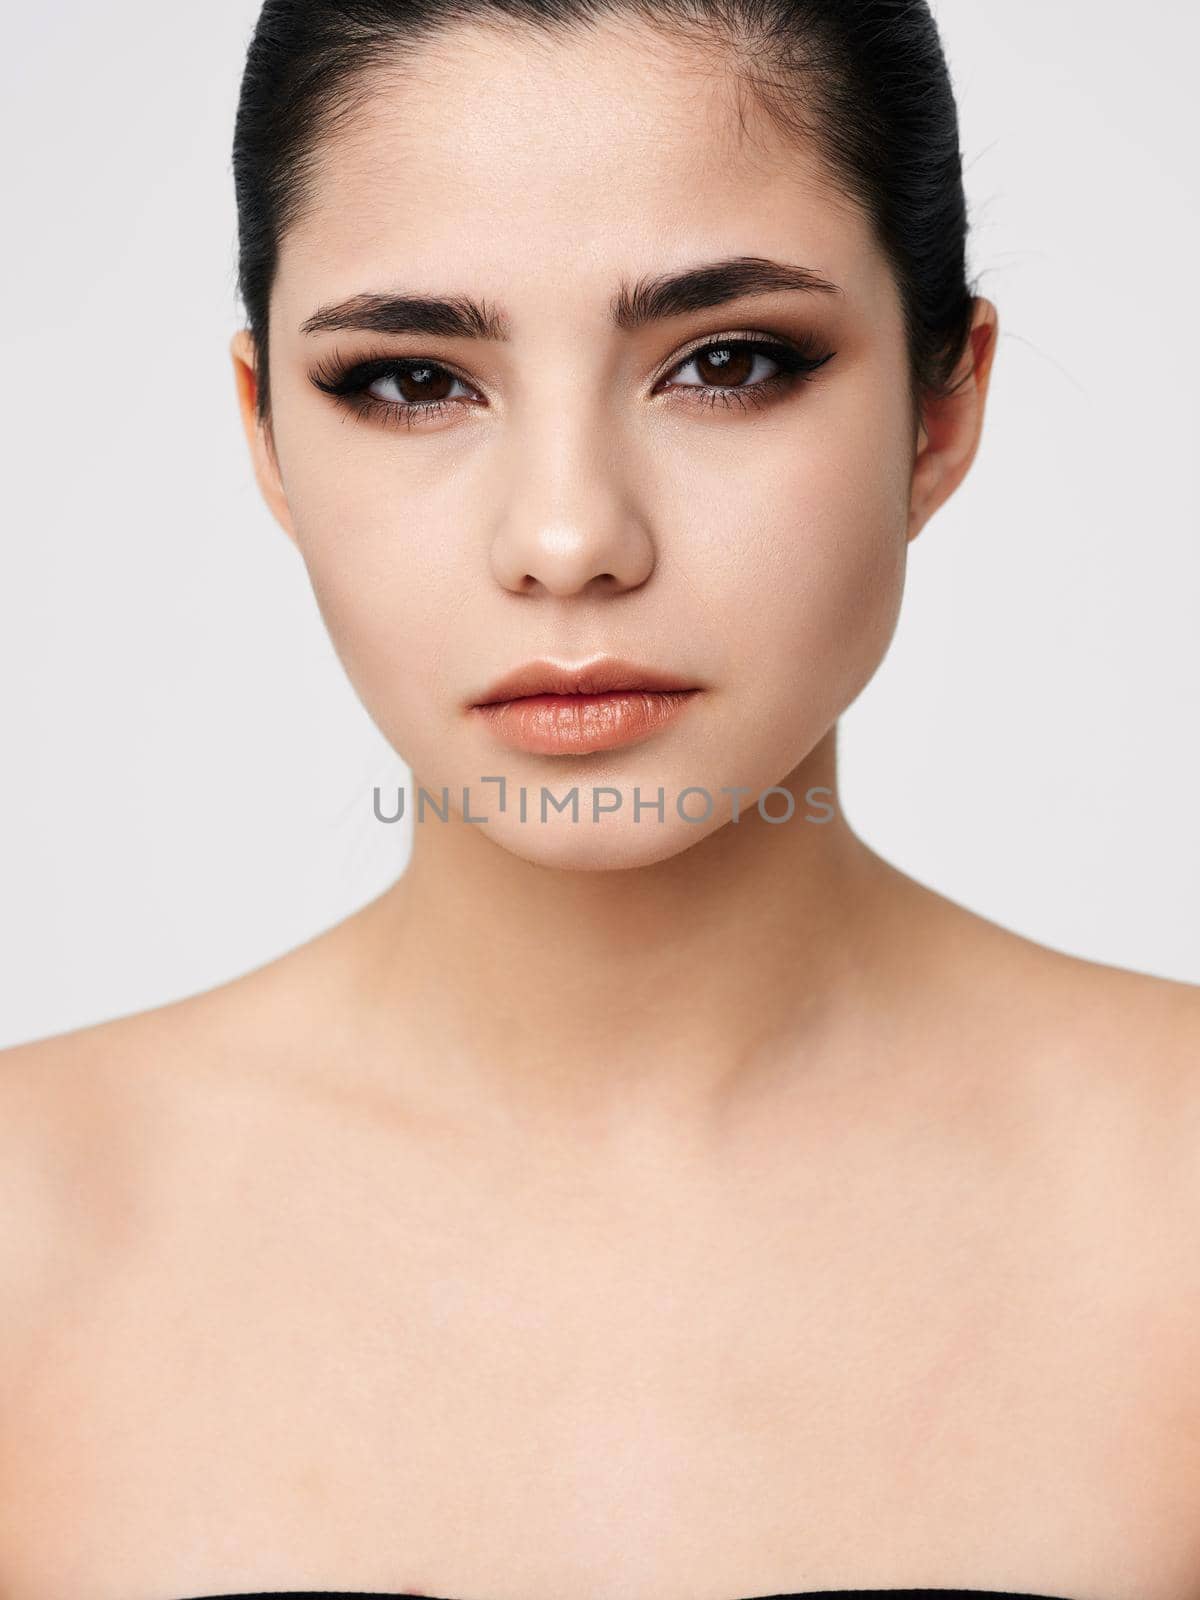 attractive brunette naked shoulders makeup facial closeup by SHOTPRIME